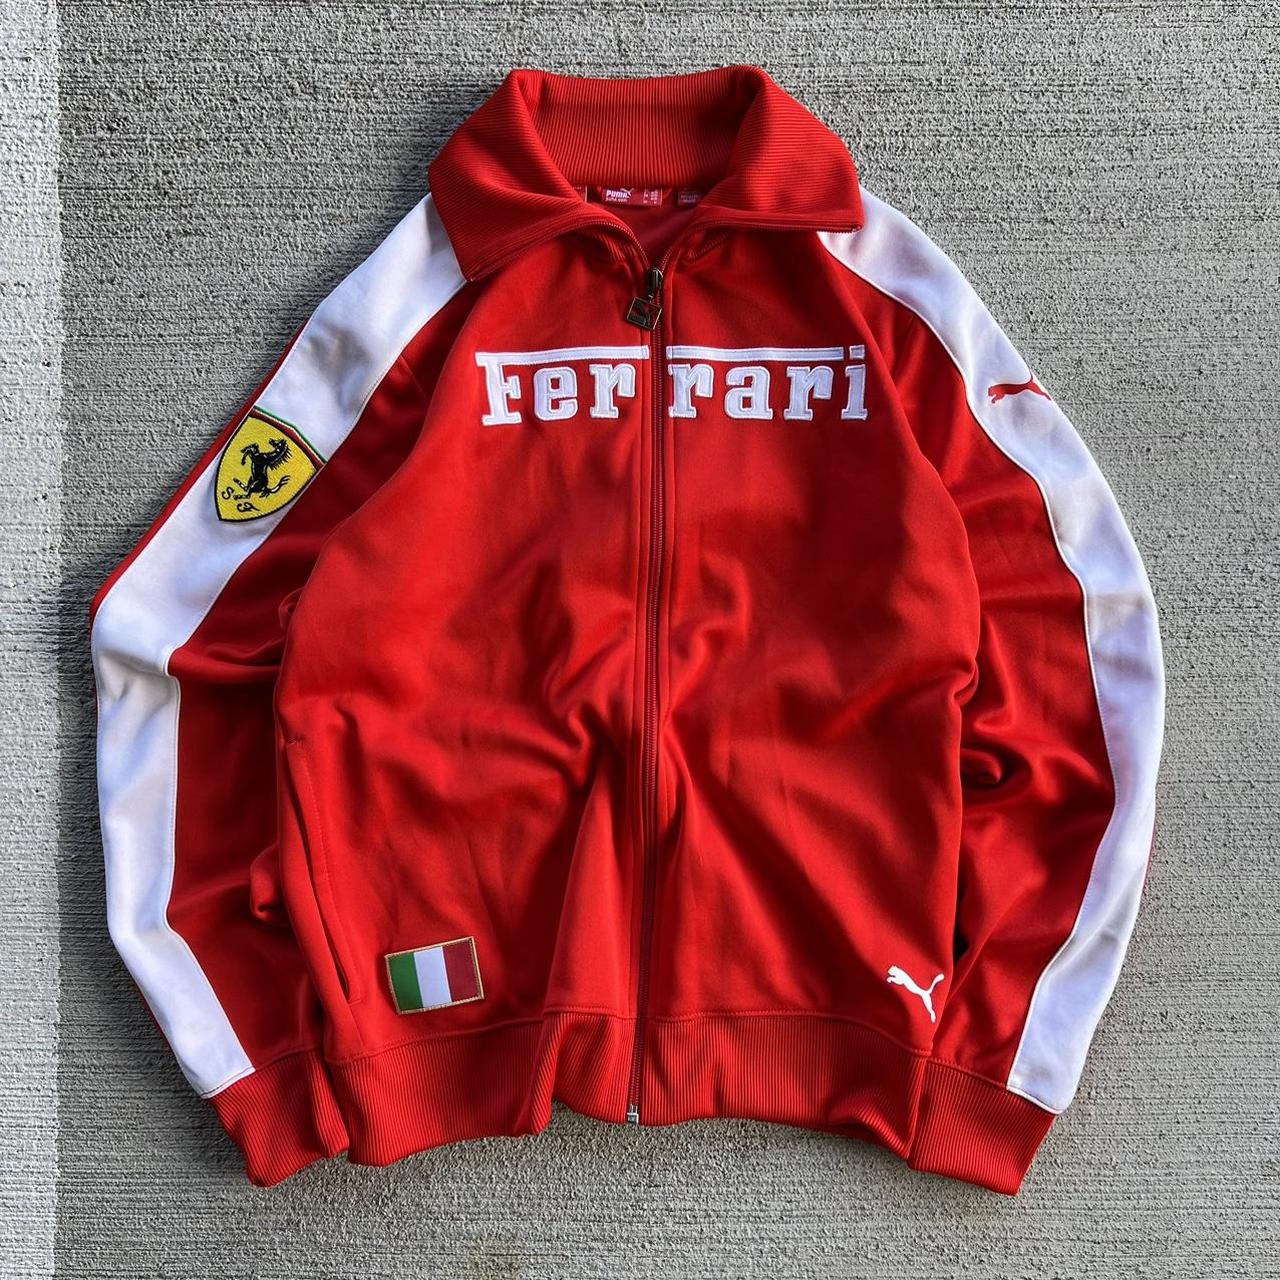 Ferrari Men's Red and White Jacket